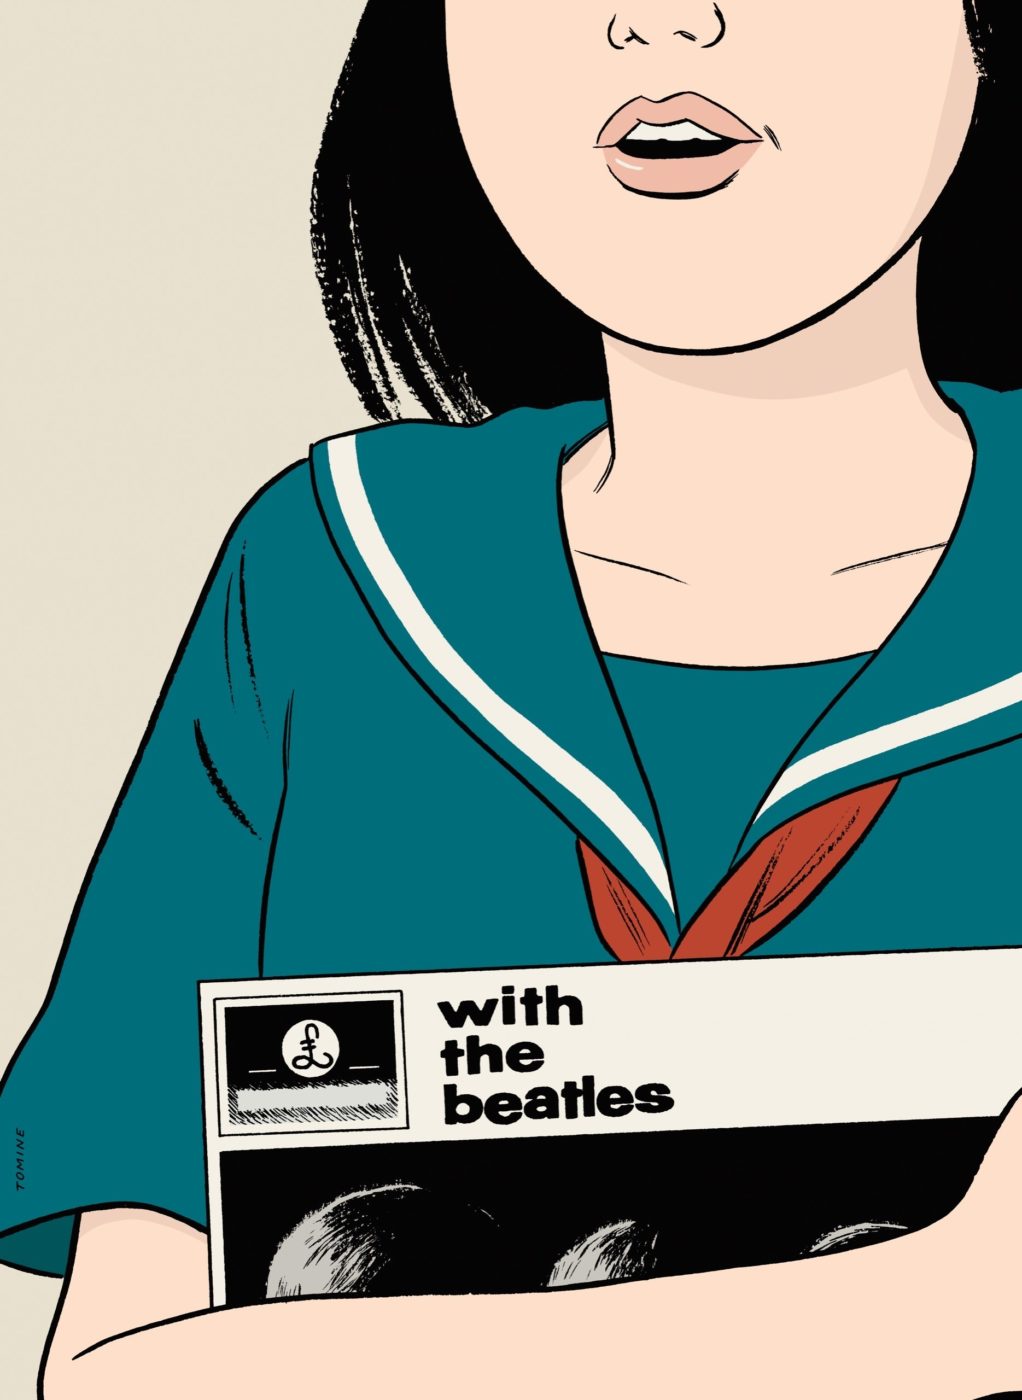 With the Beatles: um conto de Haruki Murakami ilustrado por Adrian Tomine